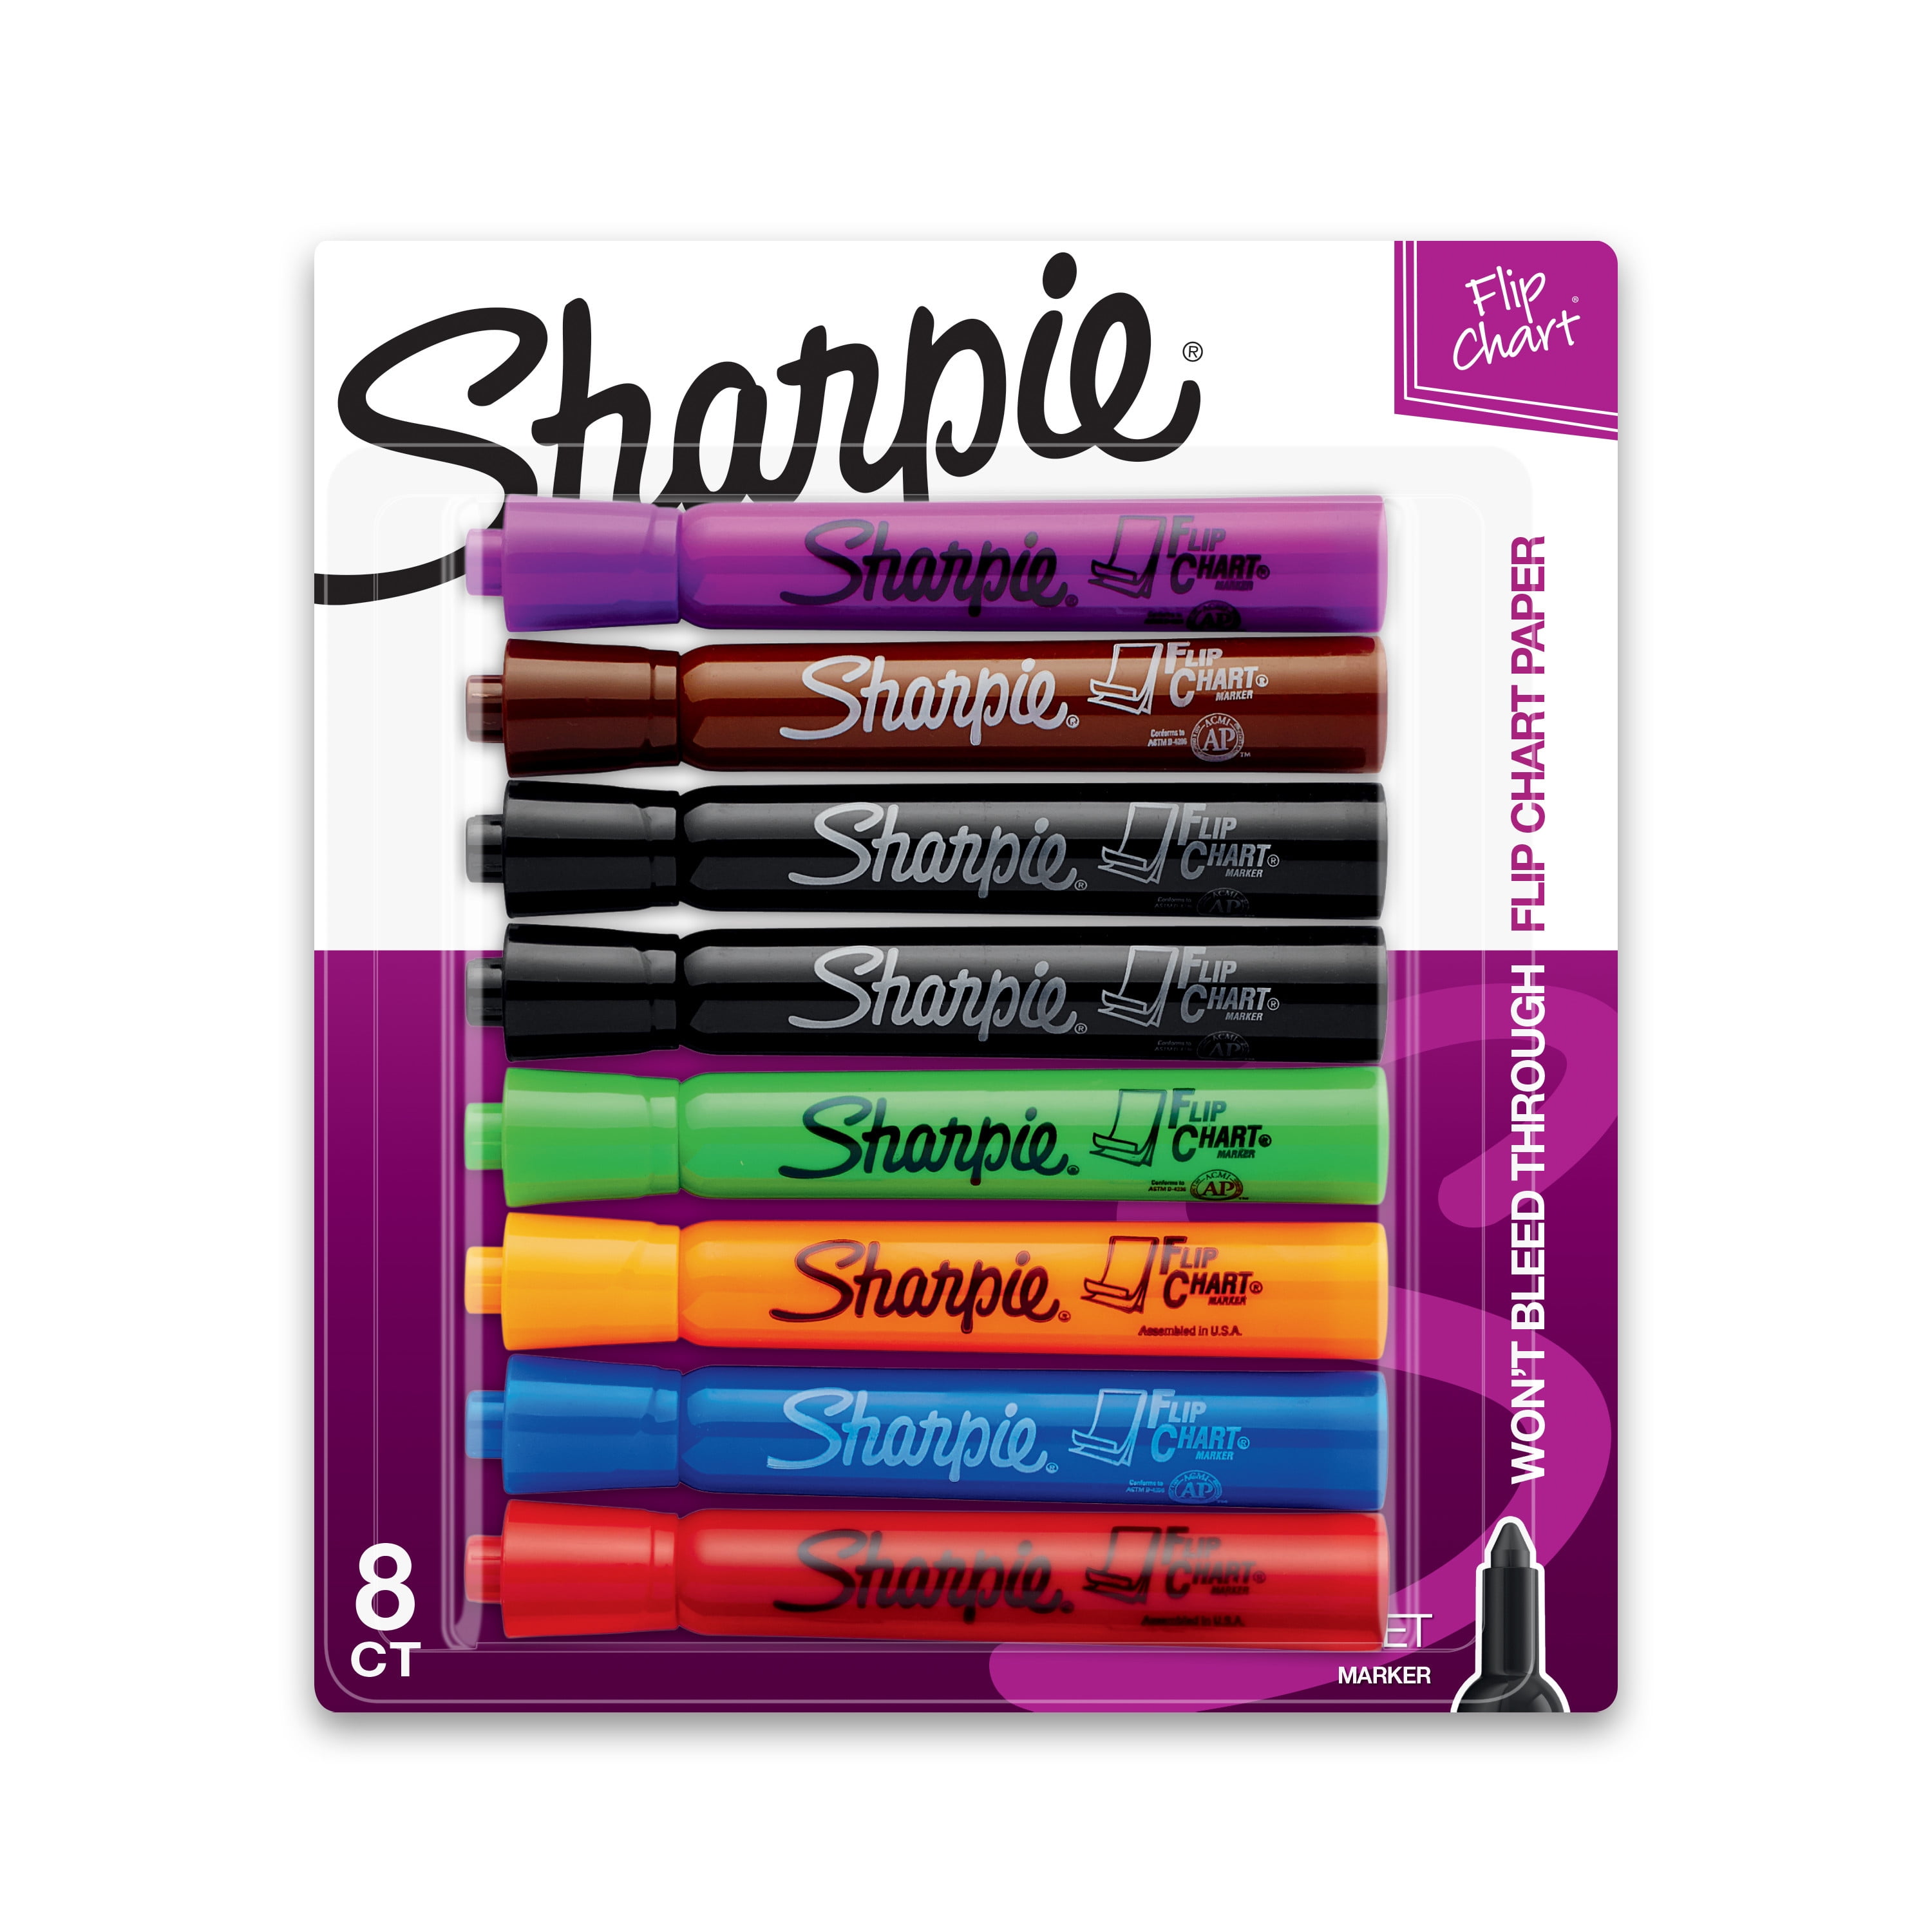 EconoCrafts: Sharpie Flip Chart Markers, Bullet Tip, Assorted Colors